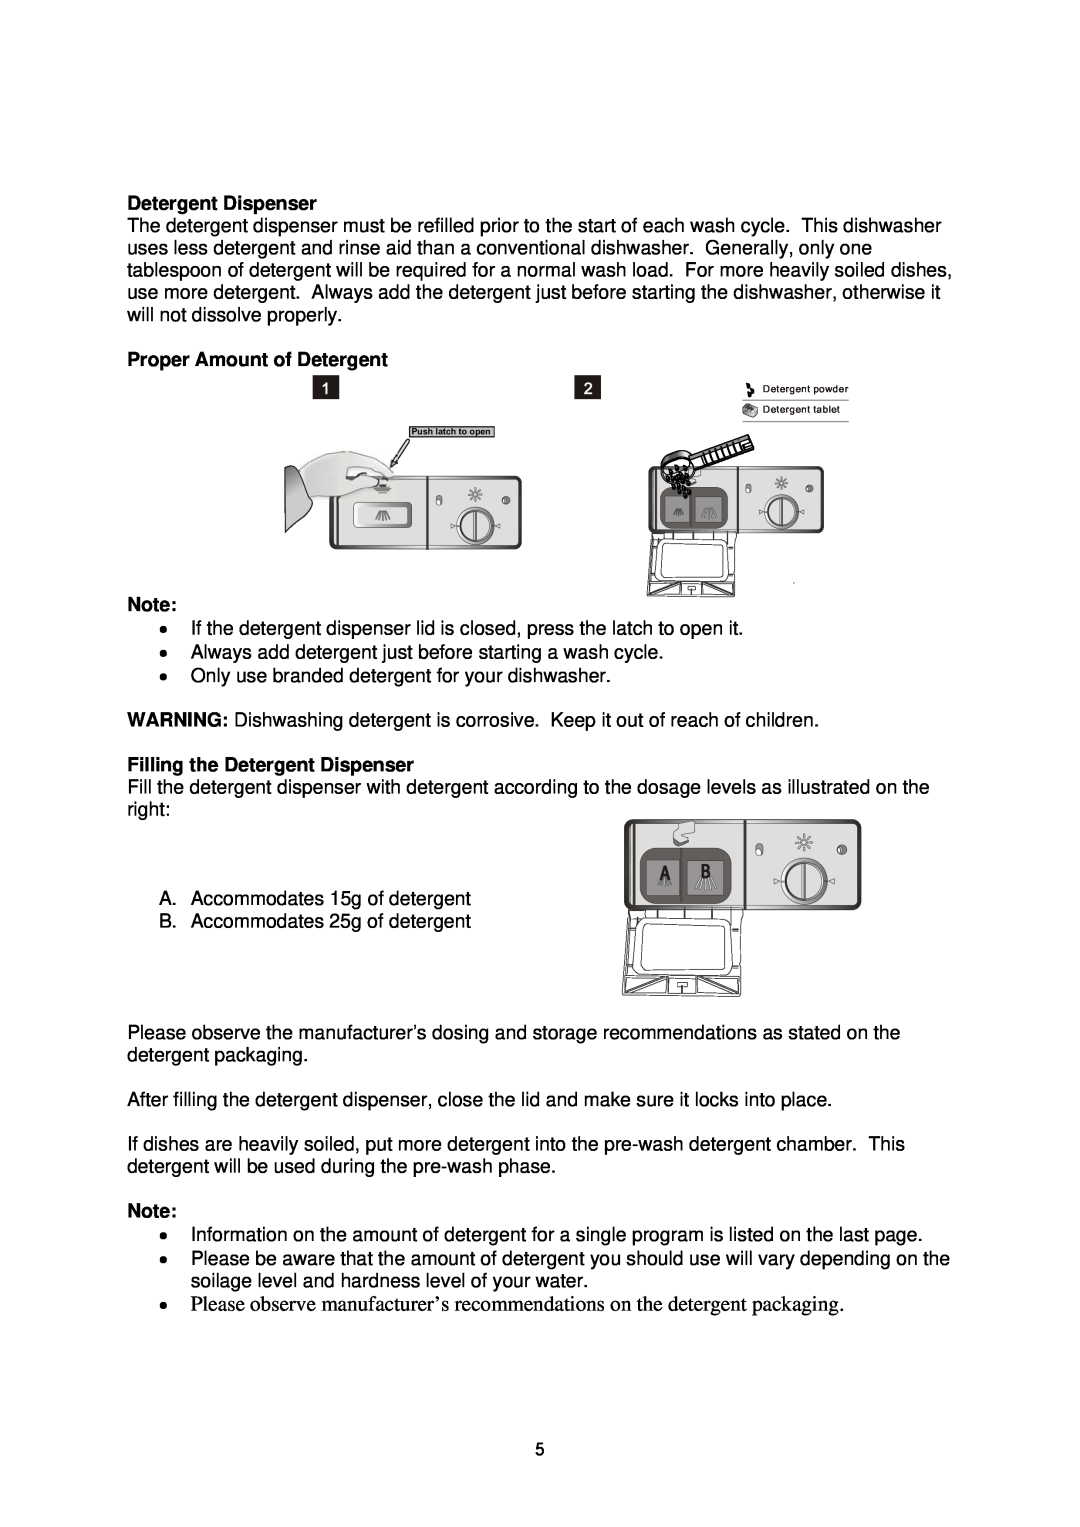 NewAir ADW-2600W instruction manual Proper Amount of Detergent, Filling the Detergent Dispenser 